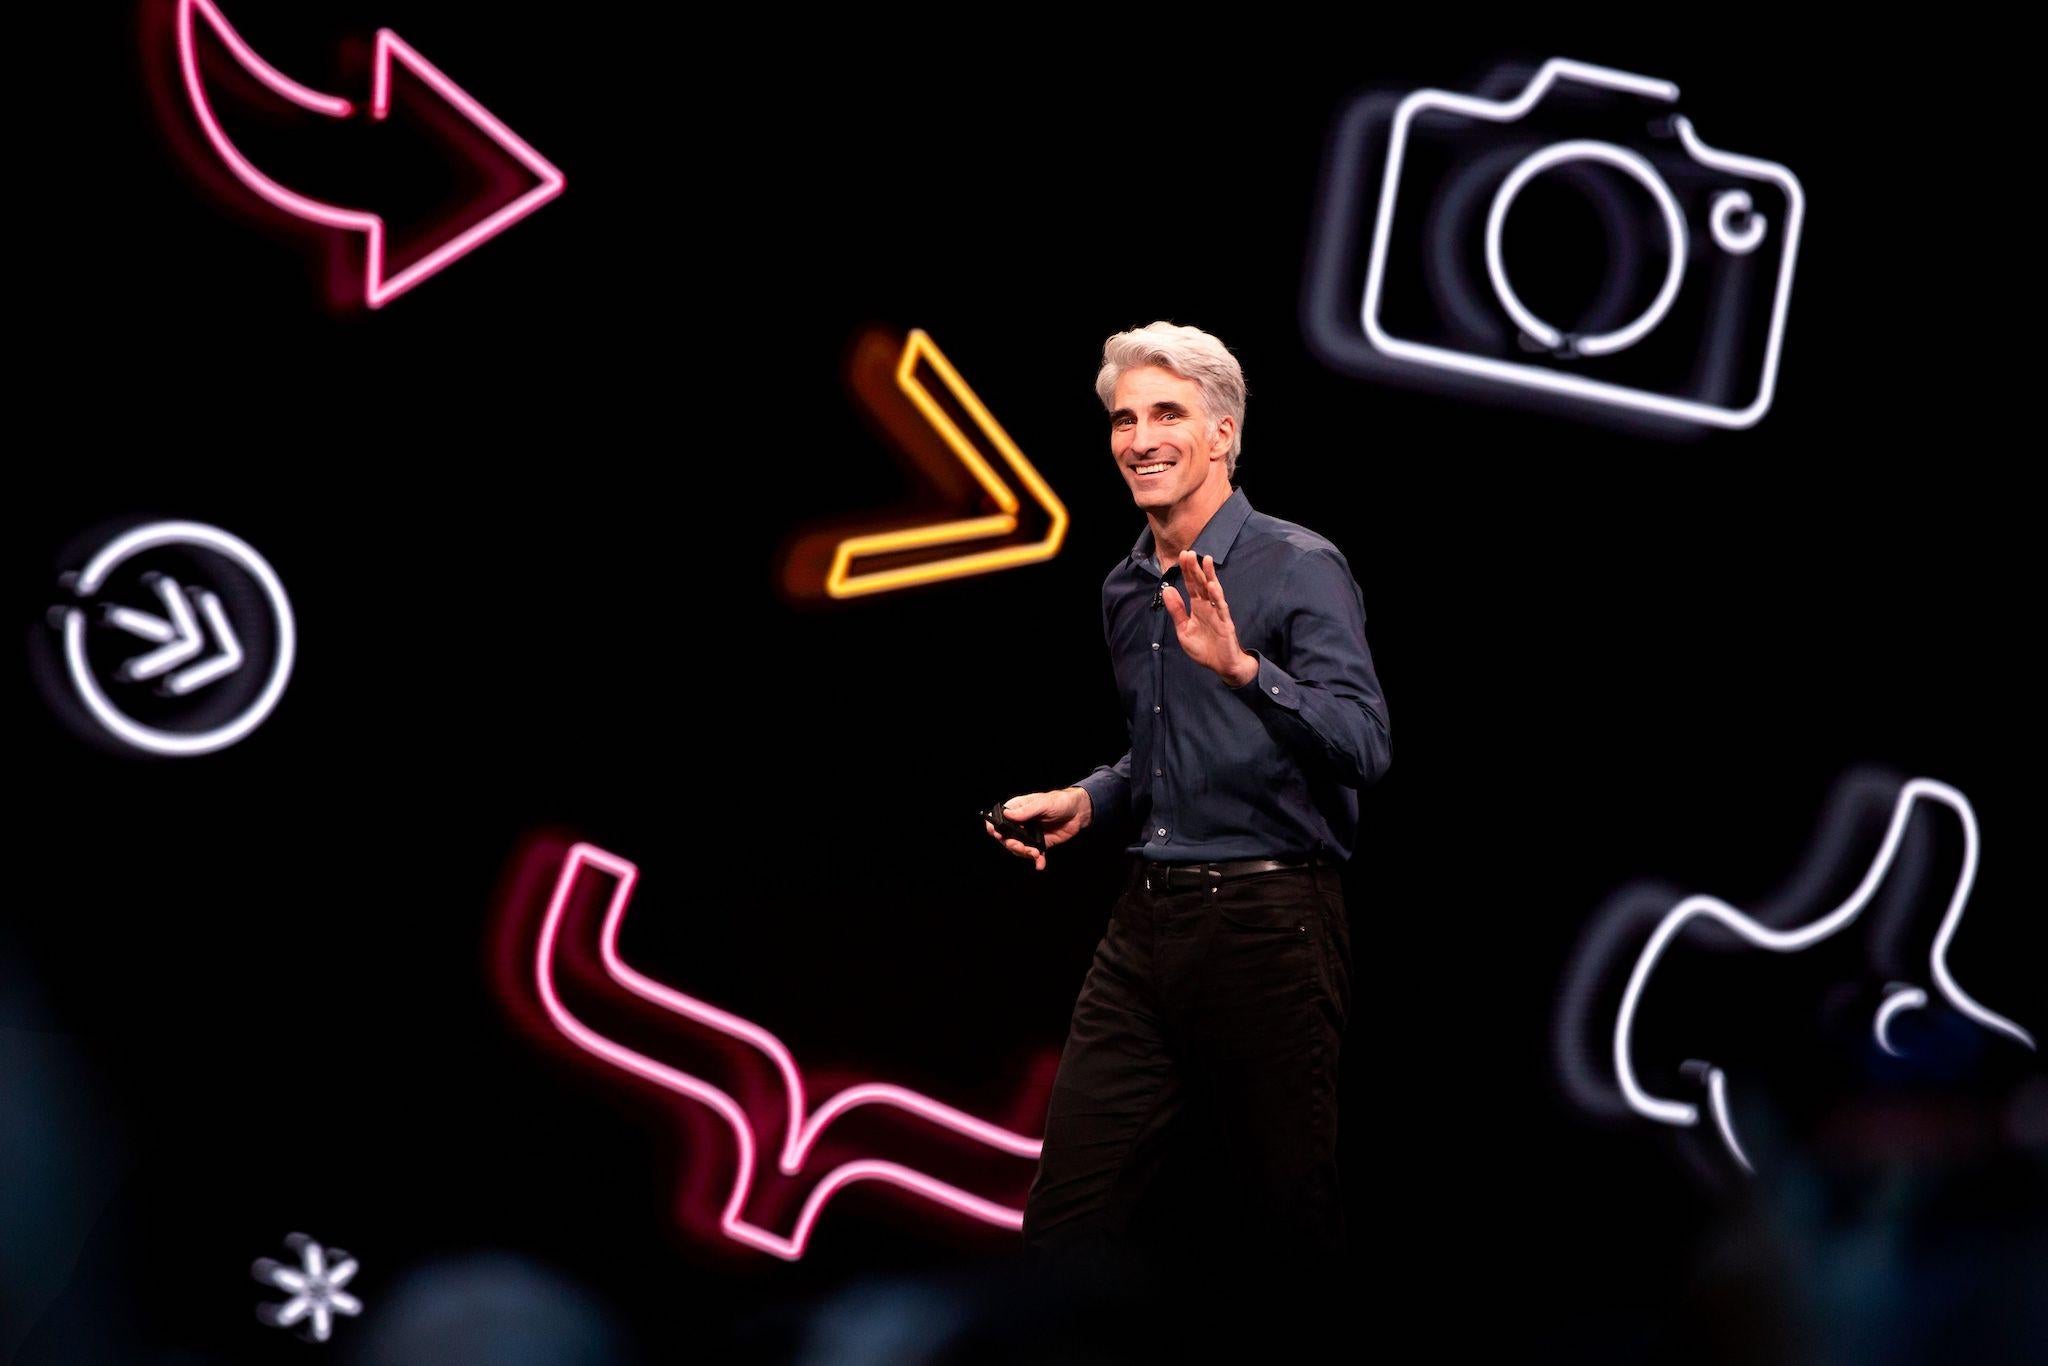 Apple's senior vice president of Software Engineering Craig Federighi speaks during Apple's Worldwide Developer Conference